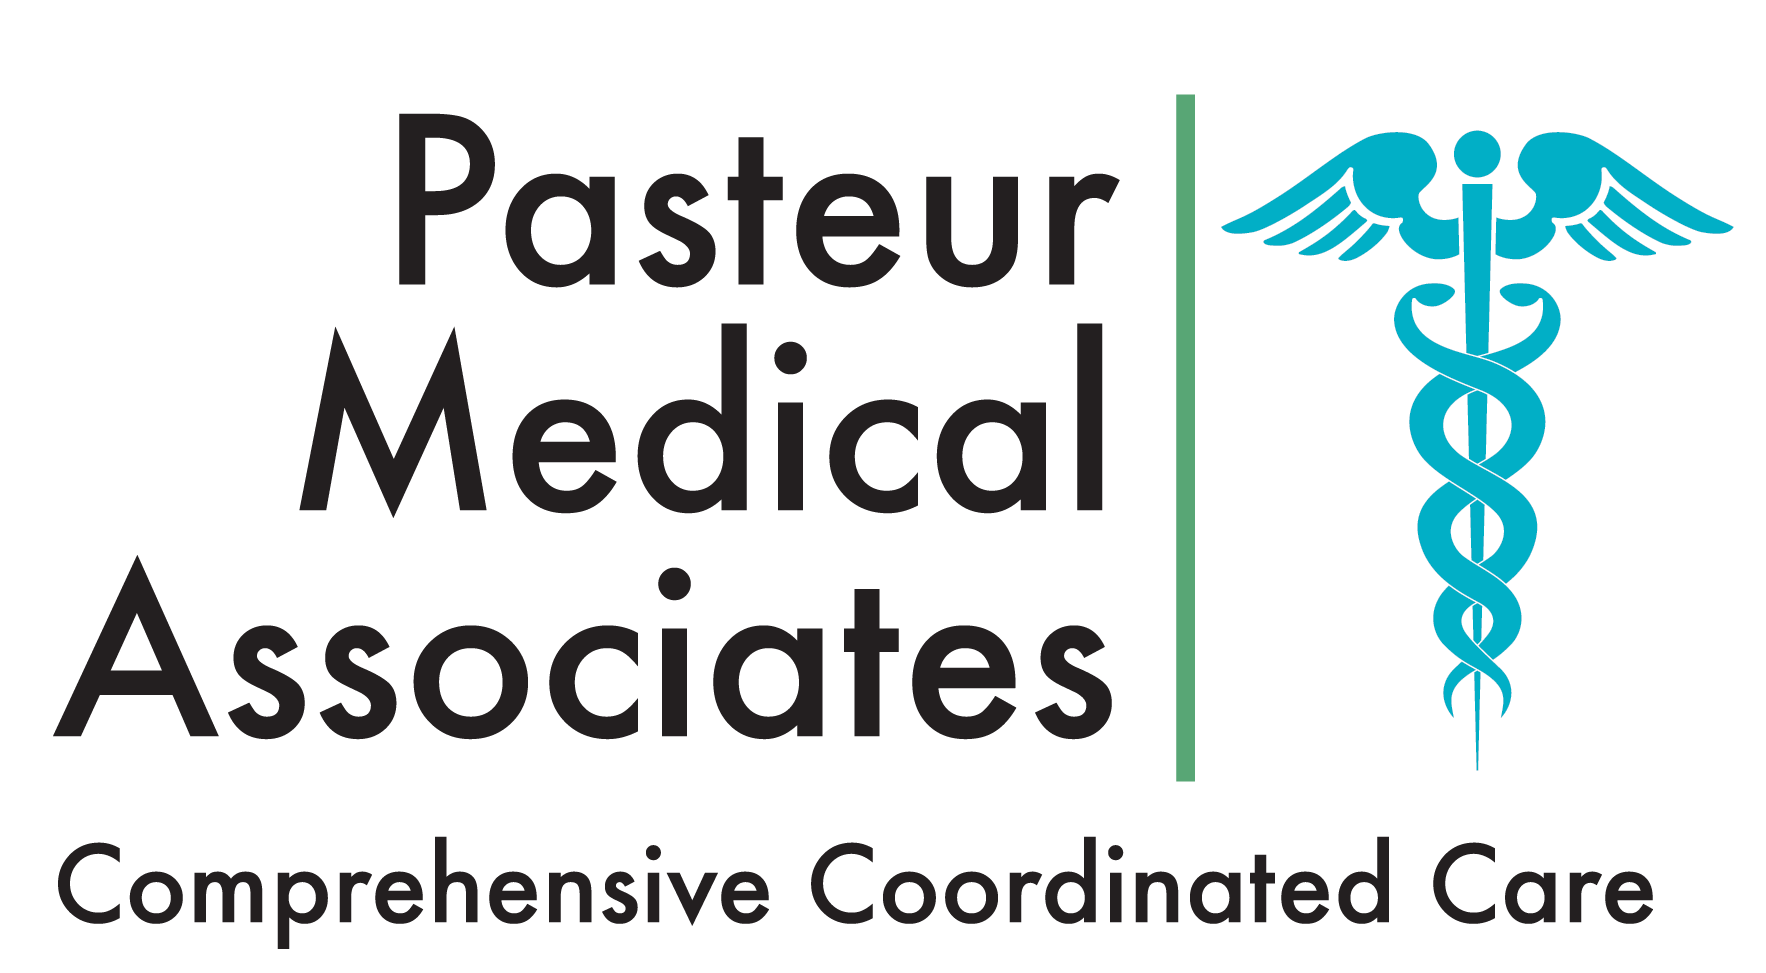 Pasteur Medical Associates - Comprehensive Coordinated Care